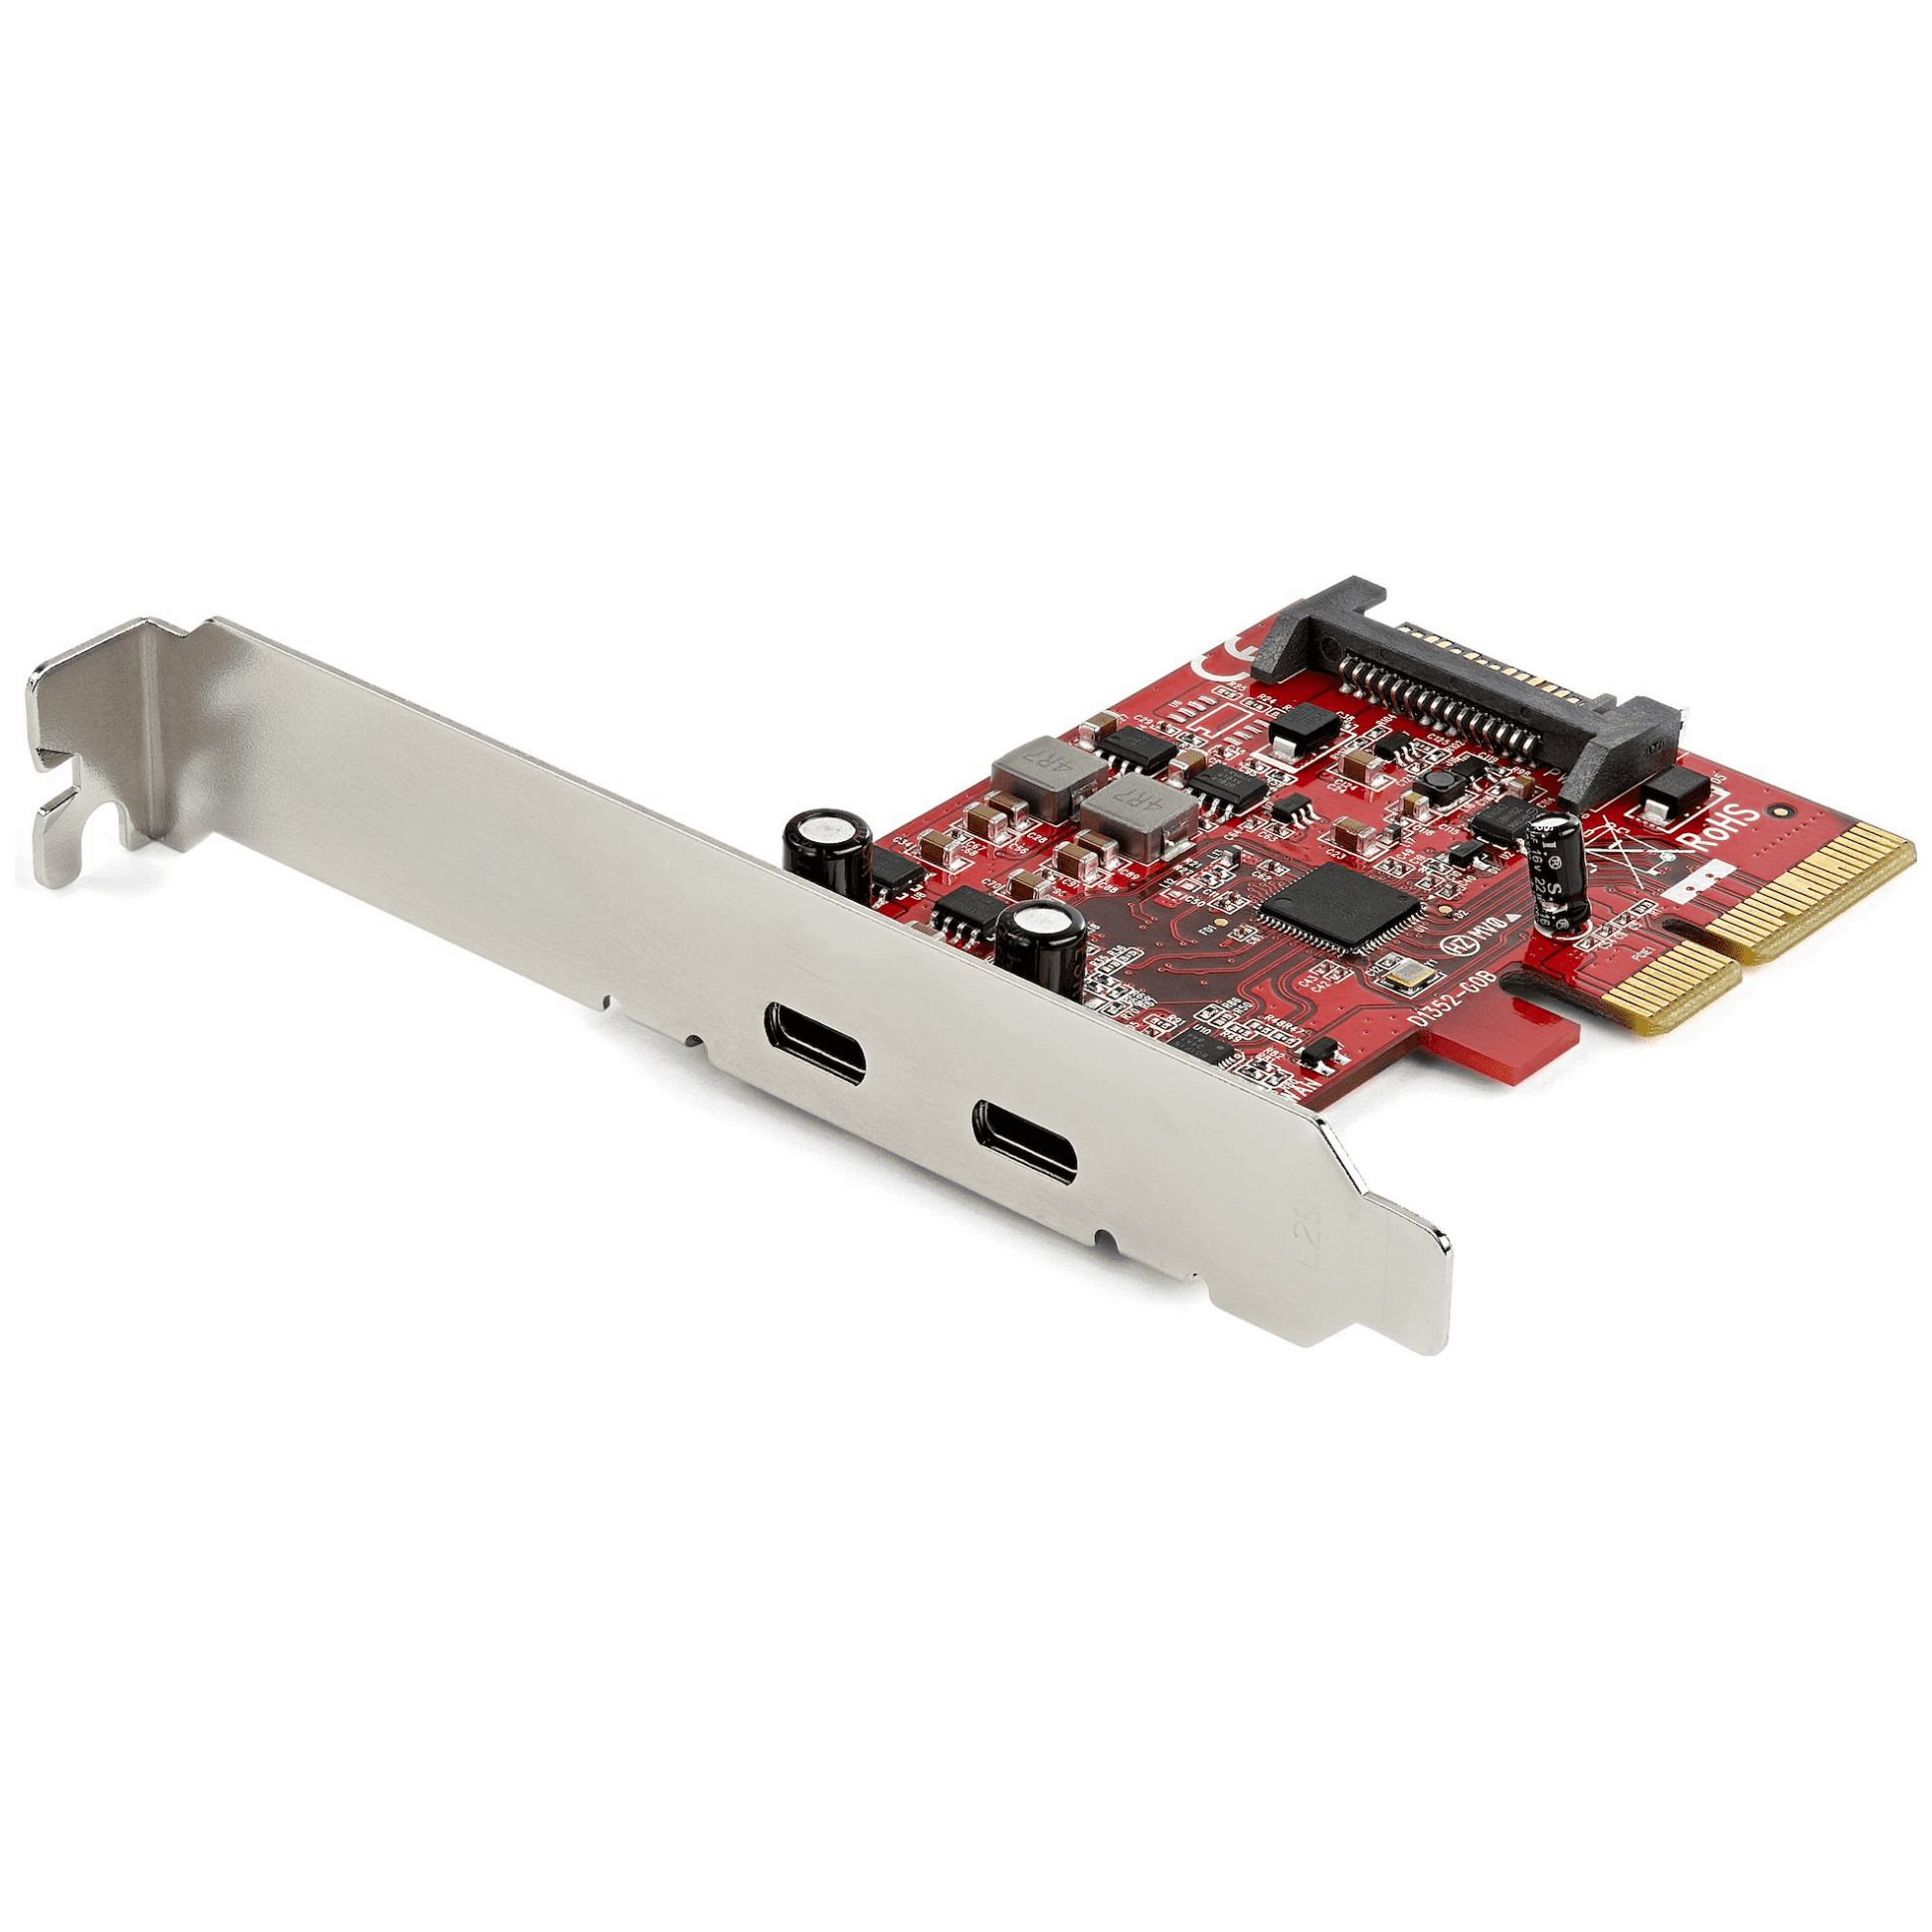 Image of Startech [PEXUSB312C3] PCIe USB 3.1 Card - 2x USB C 3.1 Gen 2 10Gbps - PCIe Gen 3 x4 - ASM3142 Chipset - USB Type C PCI Express Card